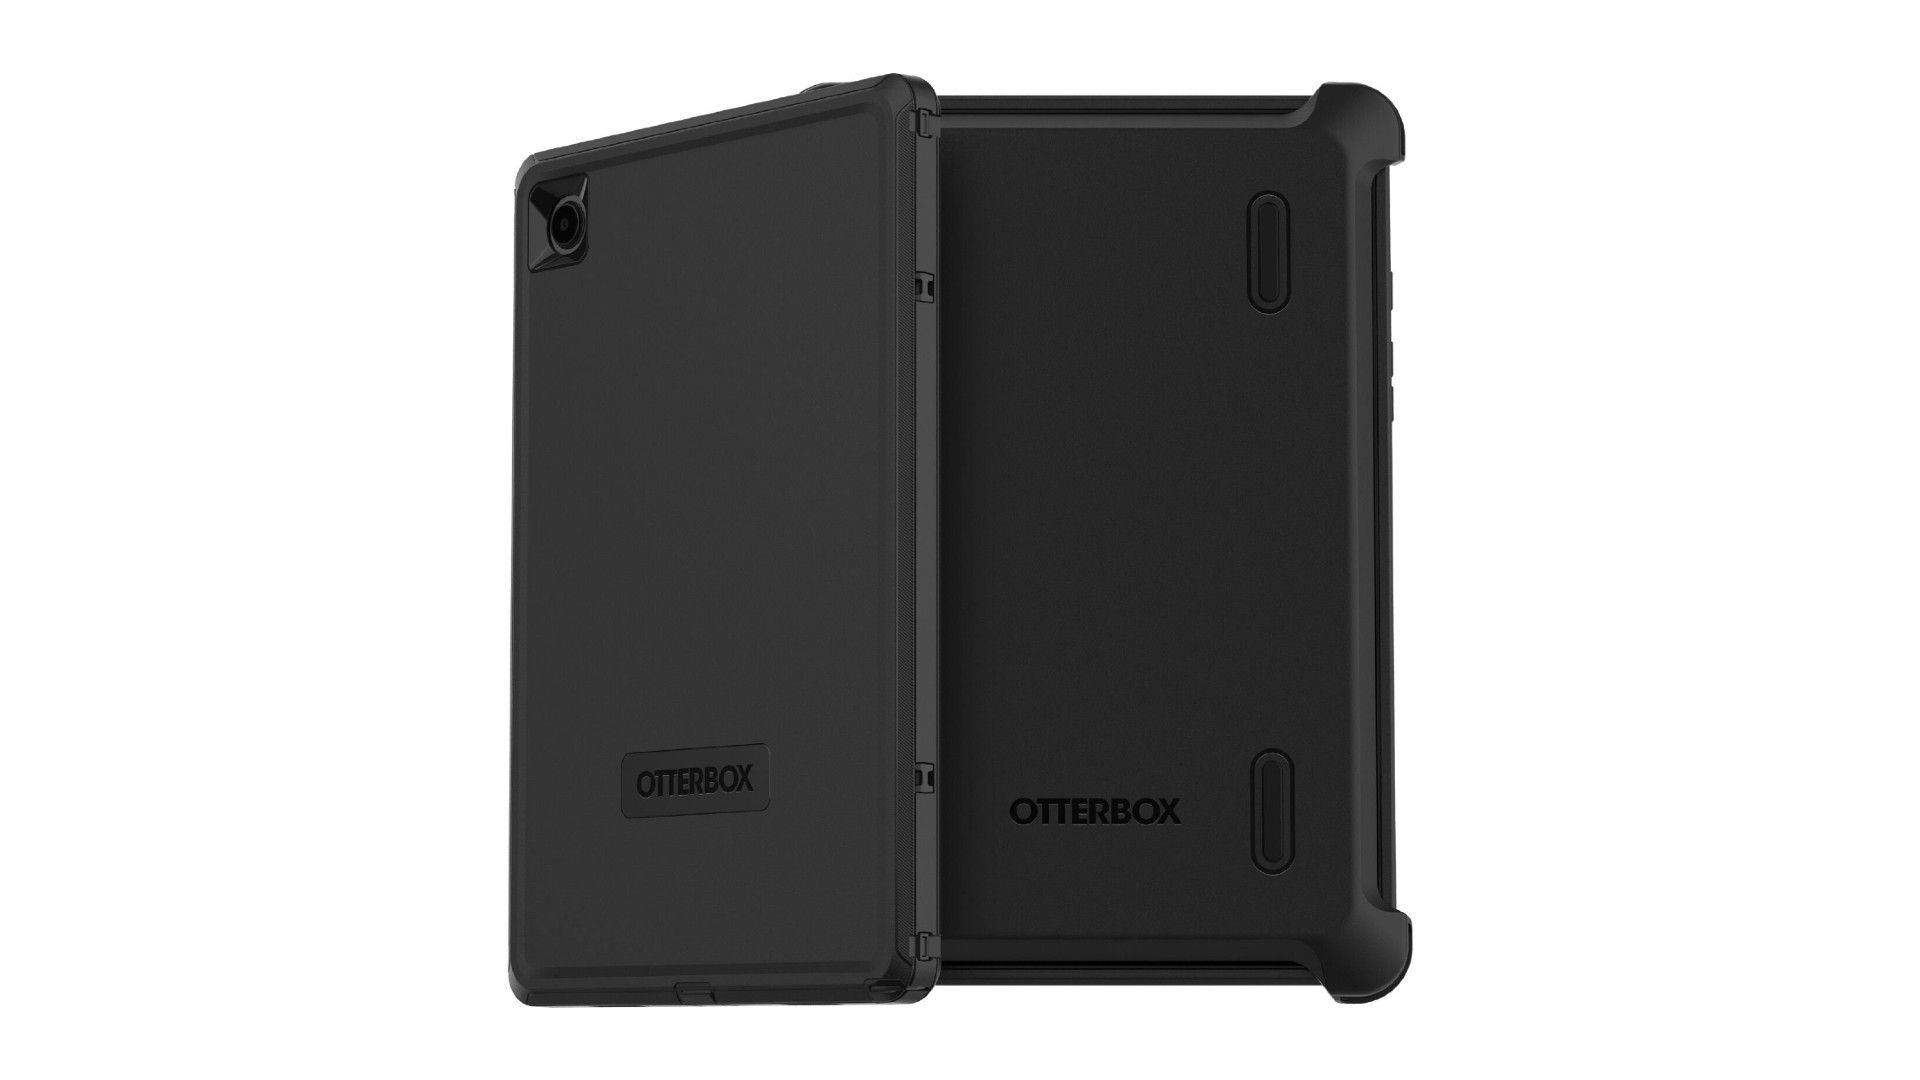 Casing seri bek Otterbox untuk Samsung Galaxy Tab A8